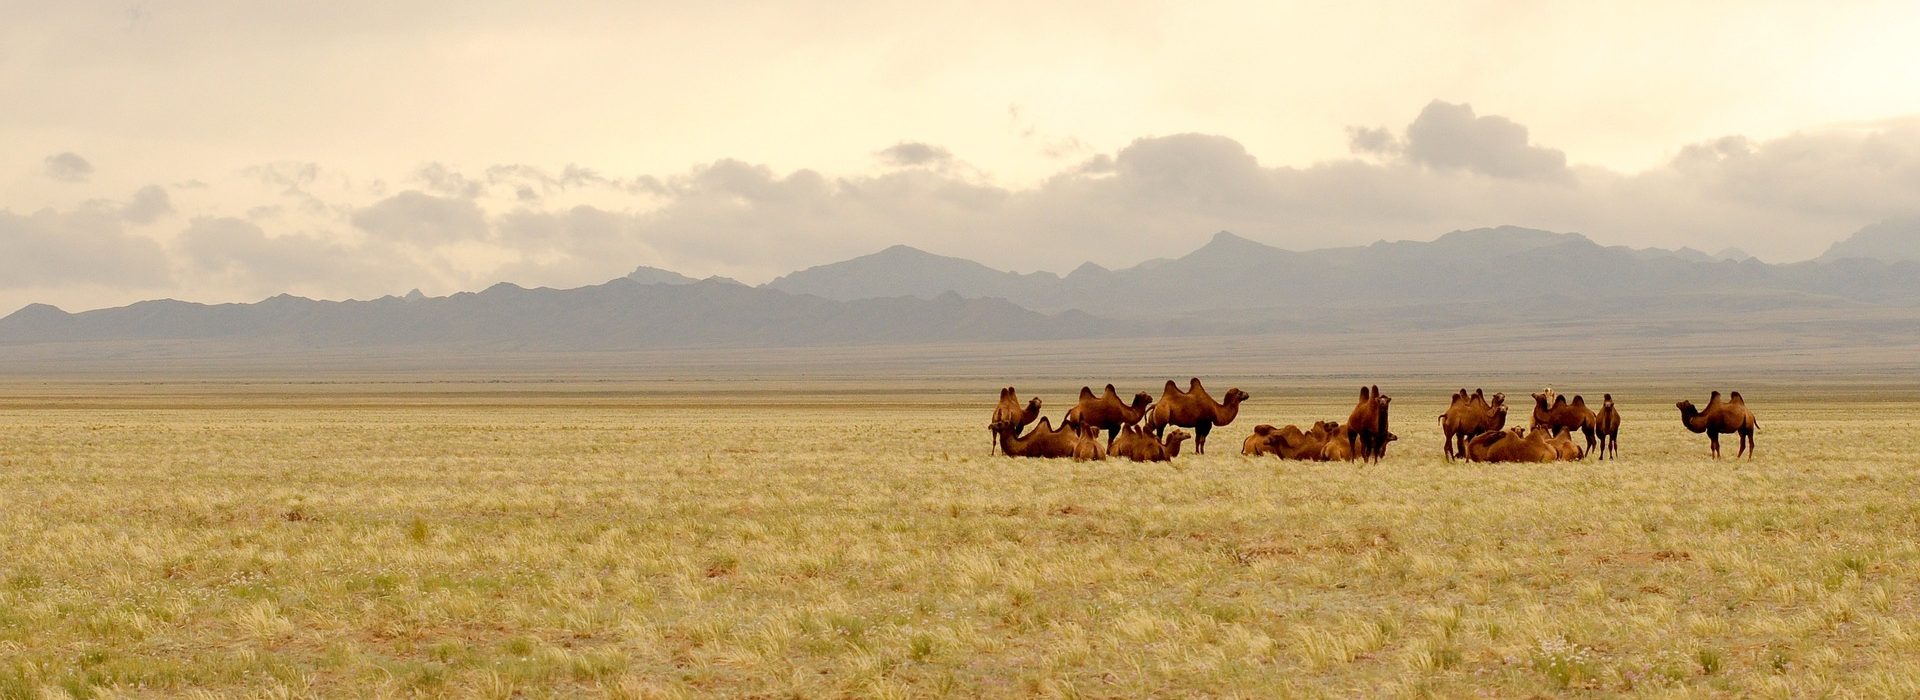 2-humped camel and Gobi nature